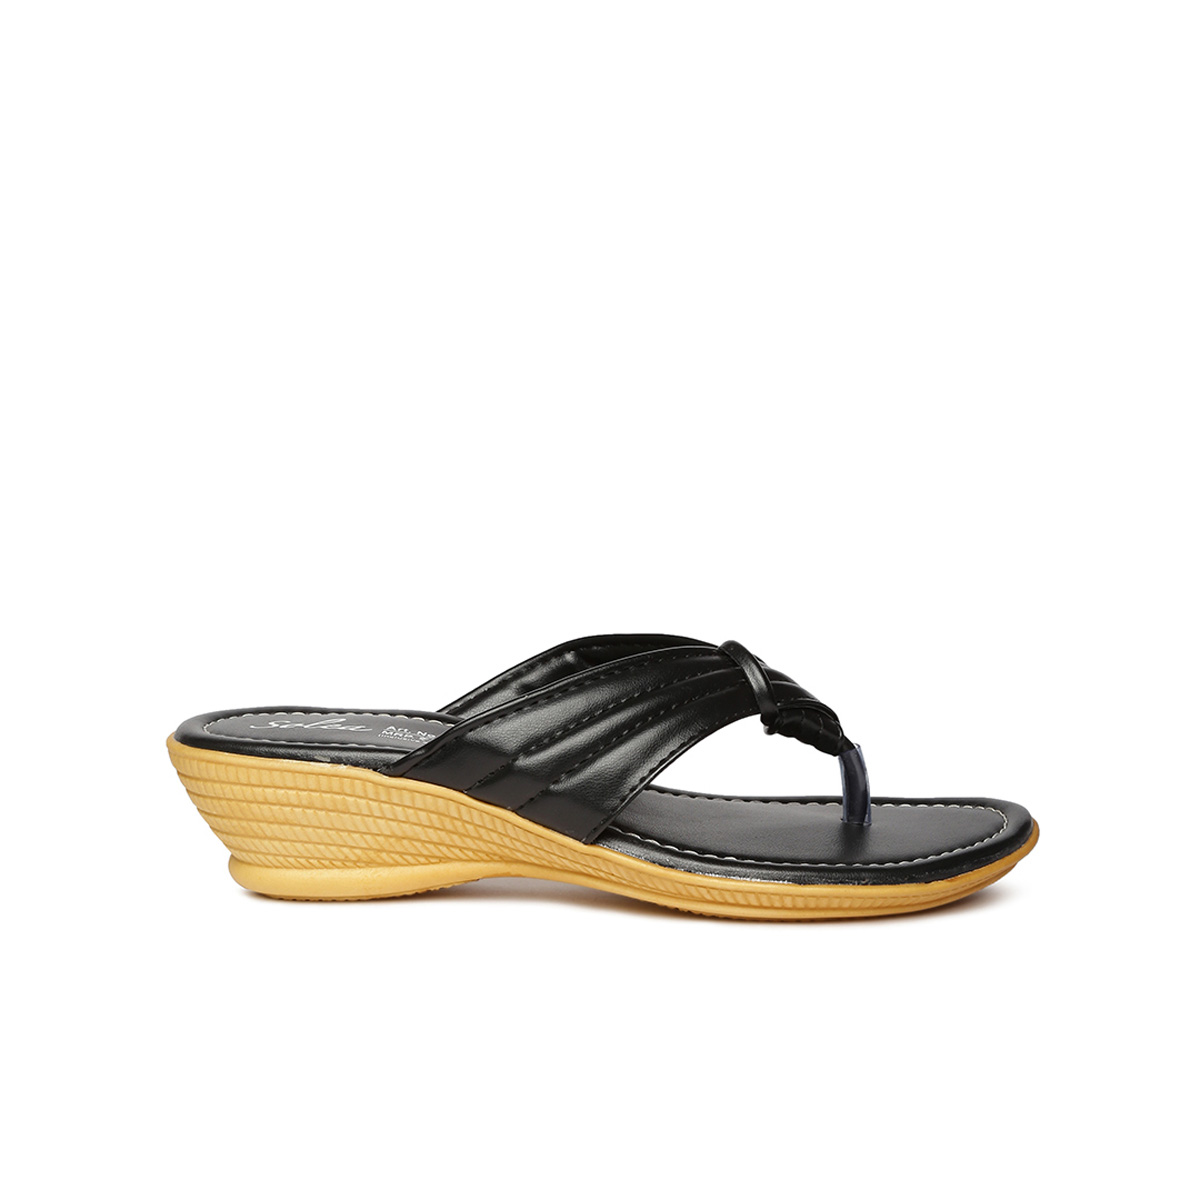 Buy Paragon-Solea Plus Women's Black Slippers Online @ ₹299 from ShopClues